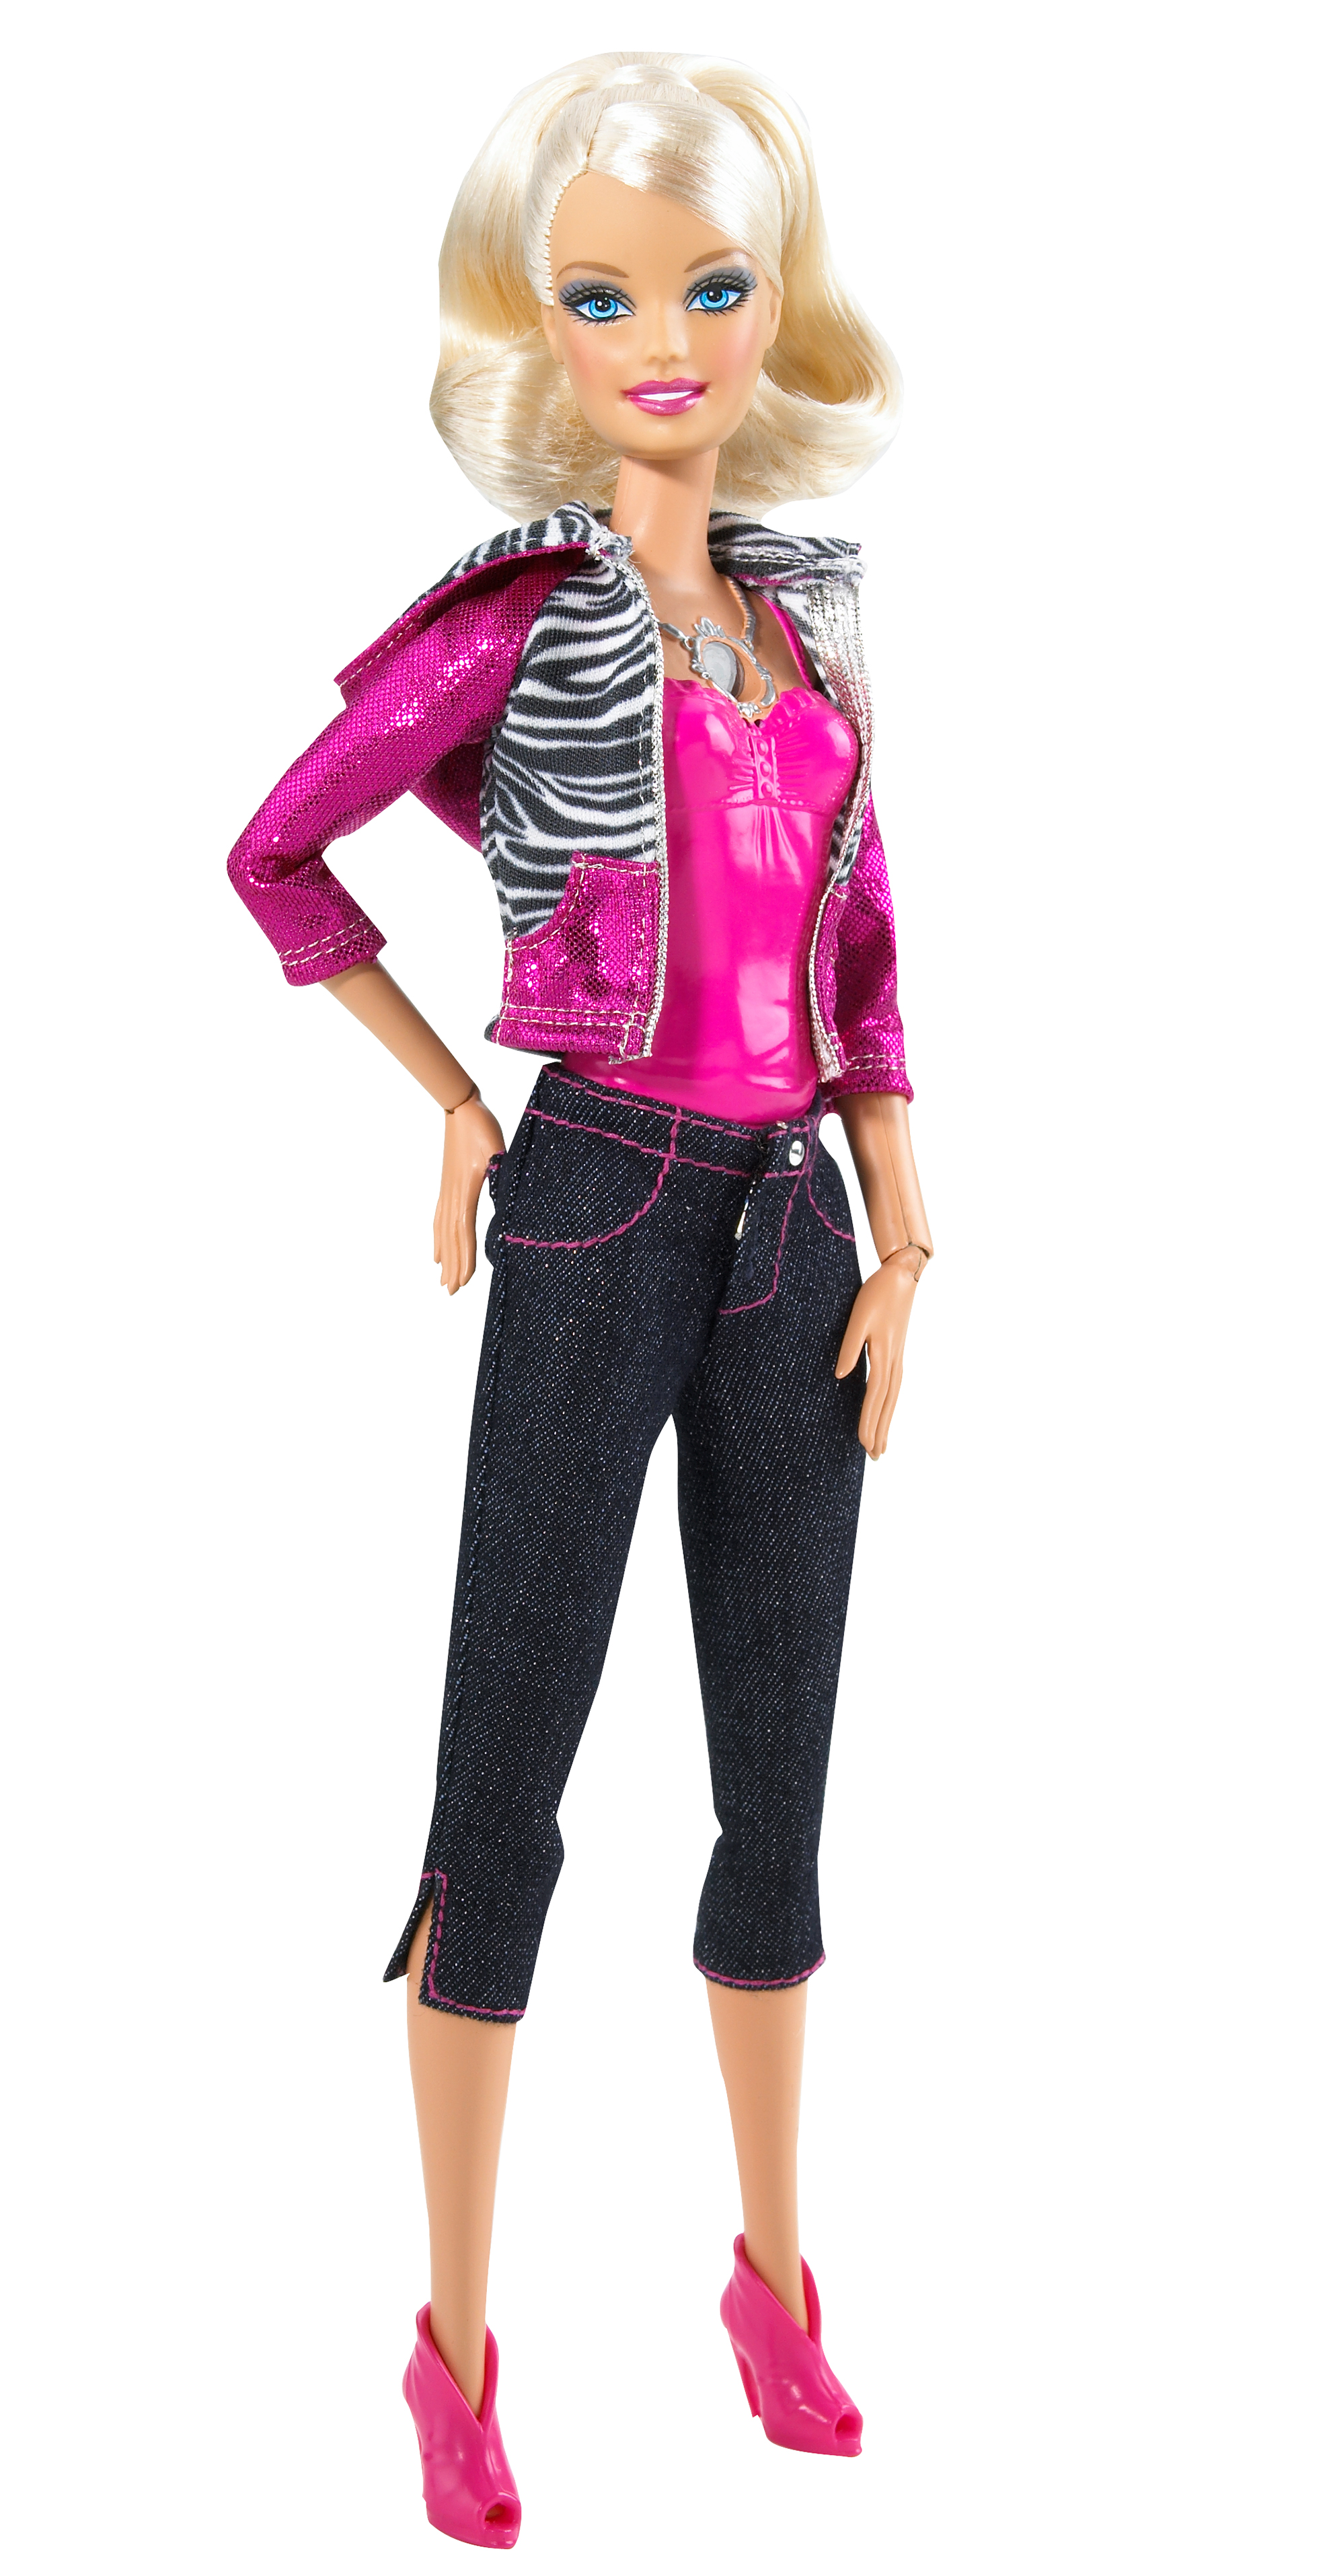 Greta Gerwig's 'Barbie' features discontinued dolls like Allan